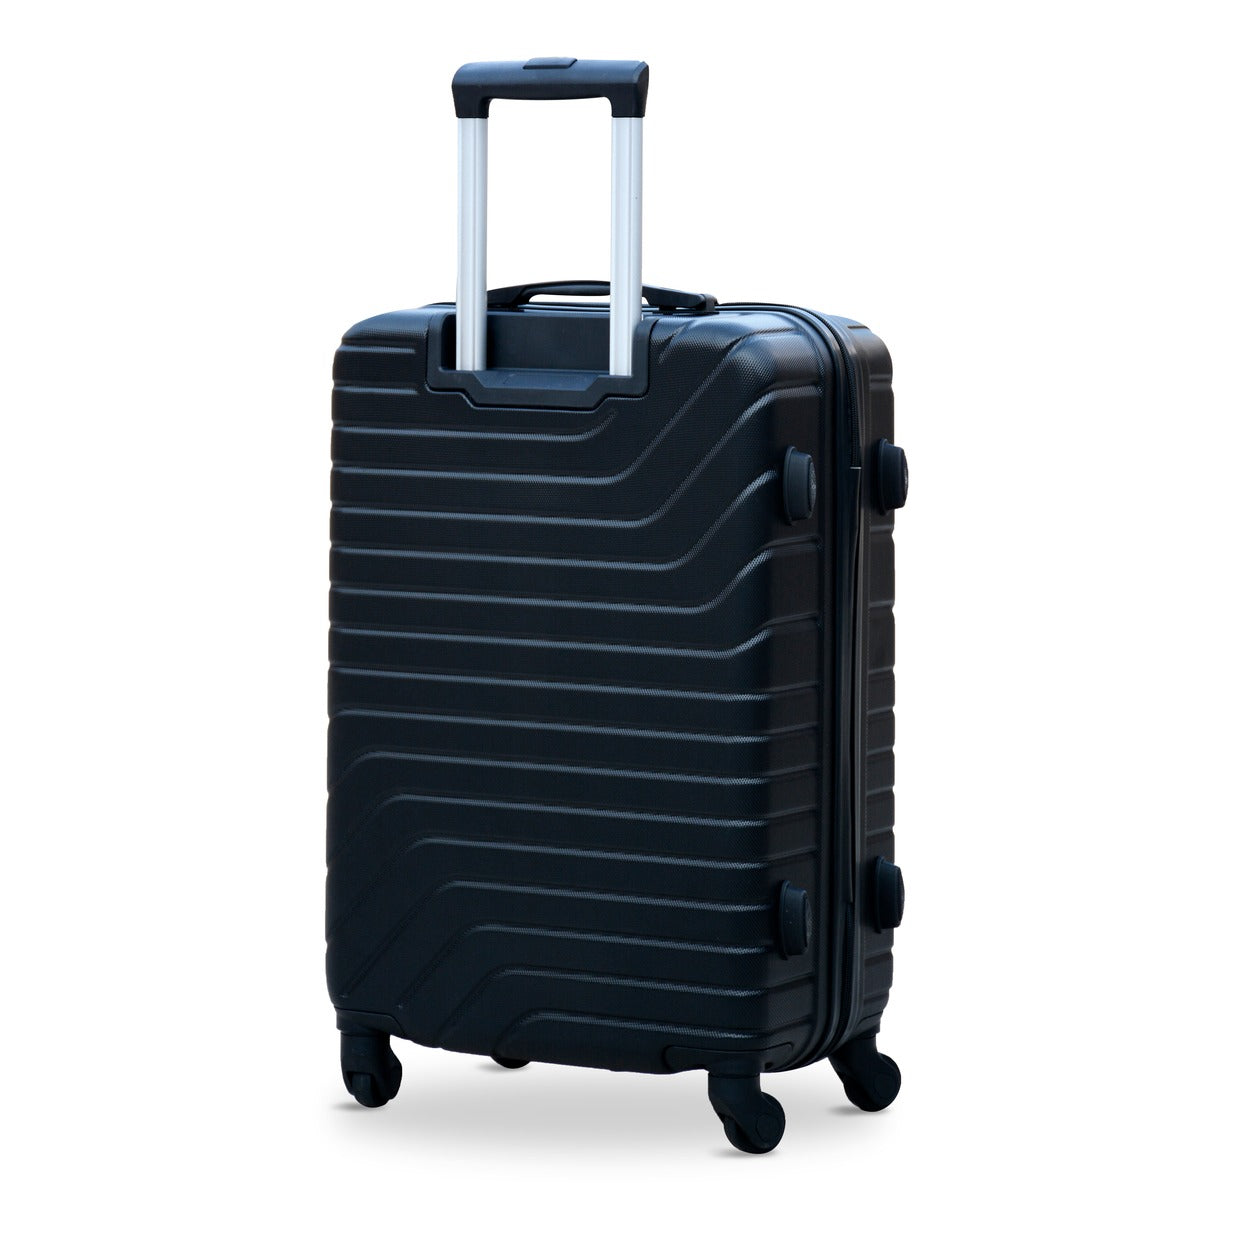 24" Black Colour SJ ABS Luggage Lightweight Hard Case Trolley Bag | 2 Year Warranty